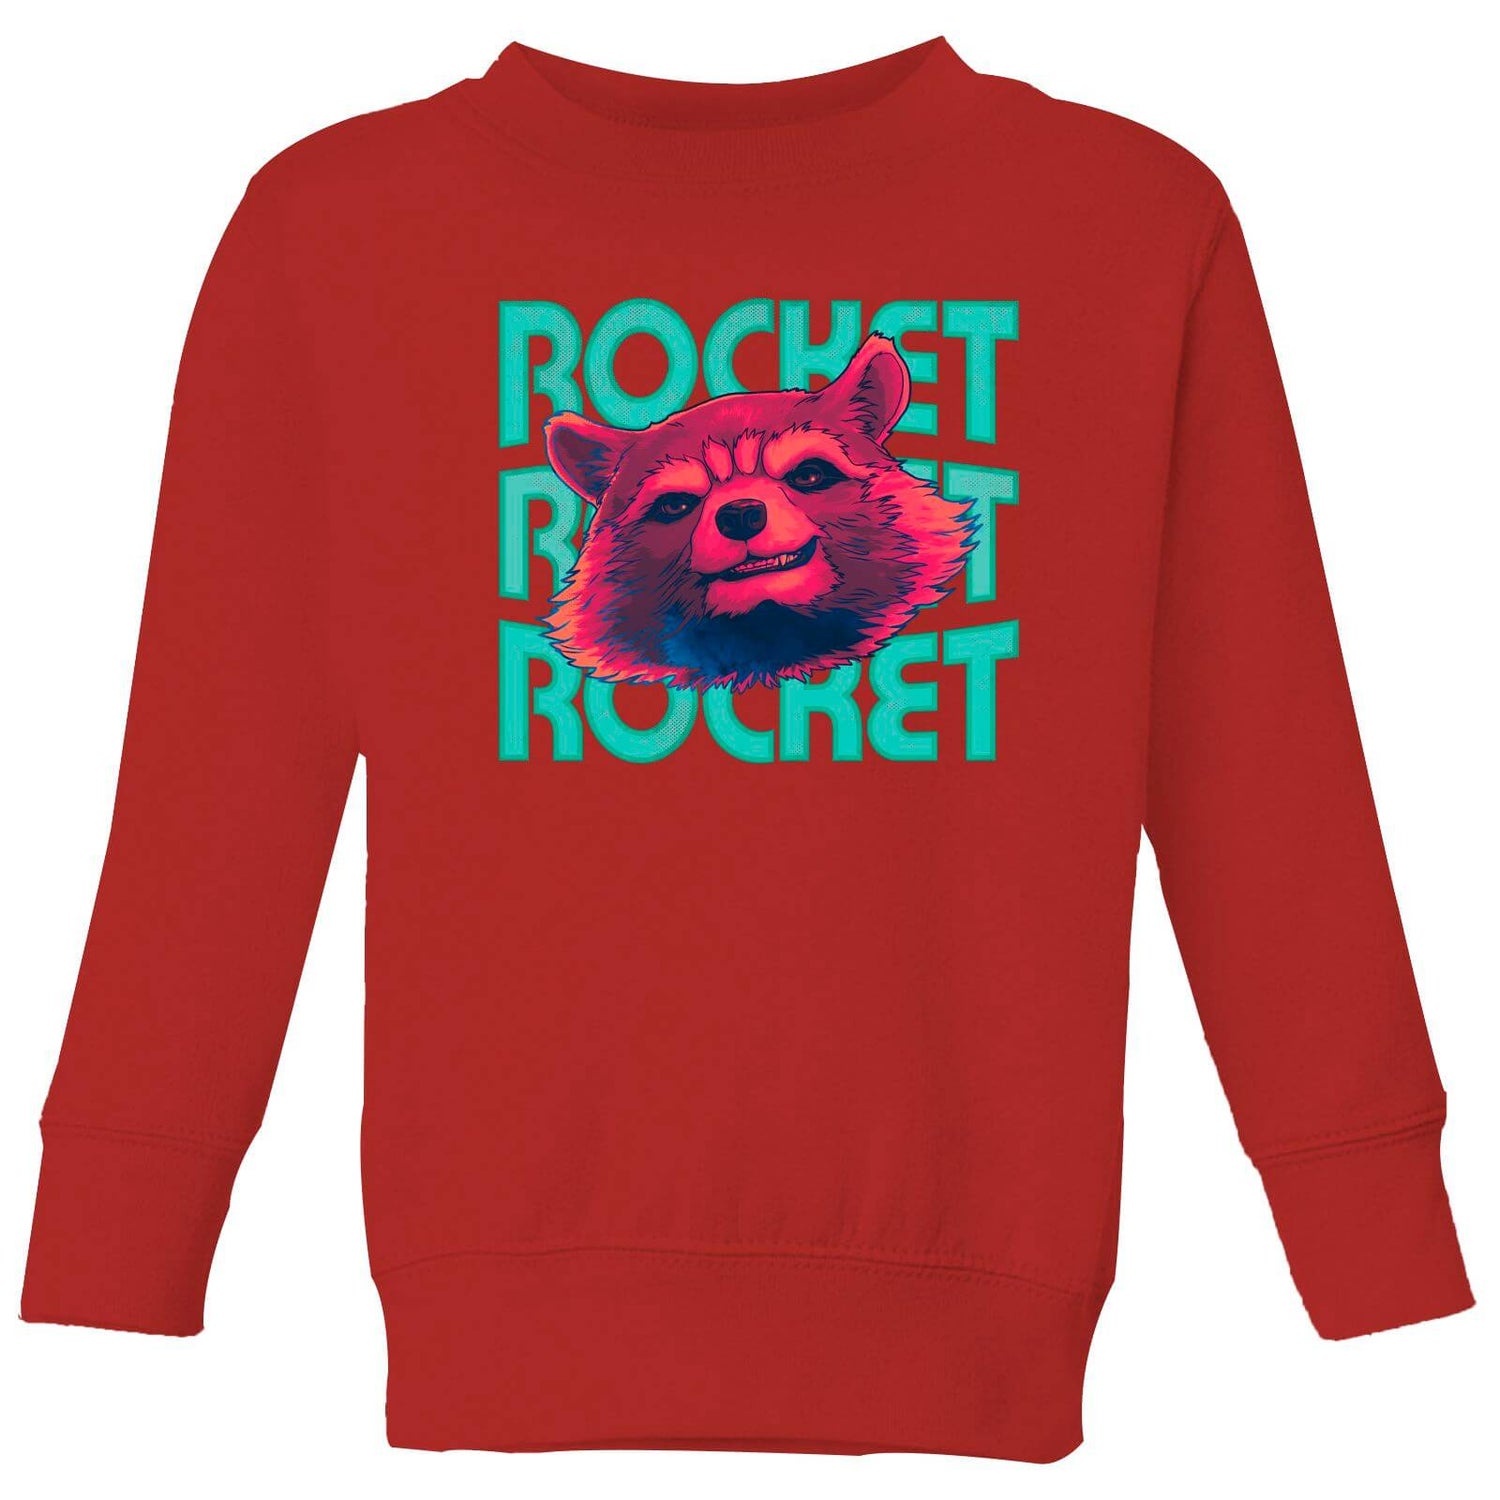 Guardians of the Galaxy Rocket Repeat Kids' Sweatshirt - Red